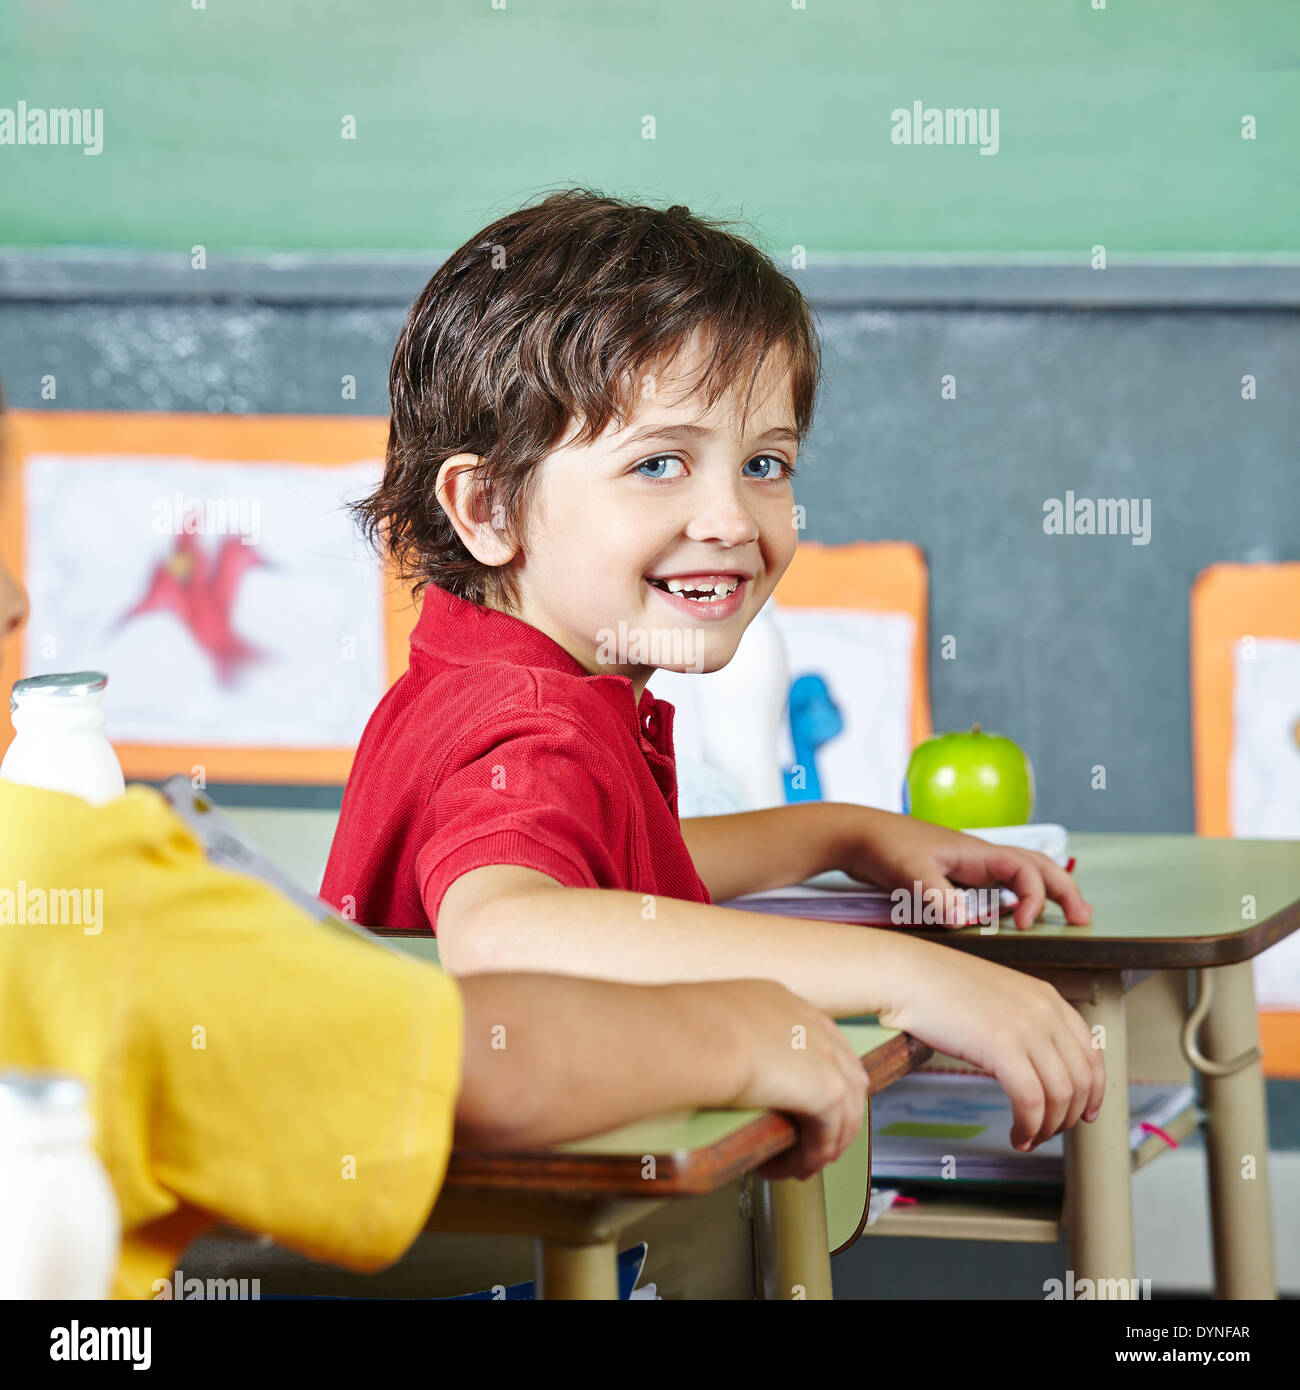 Happy abecedarian child sitting smiling in elementary school classroom Stock Photo